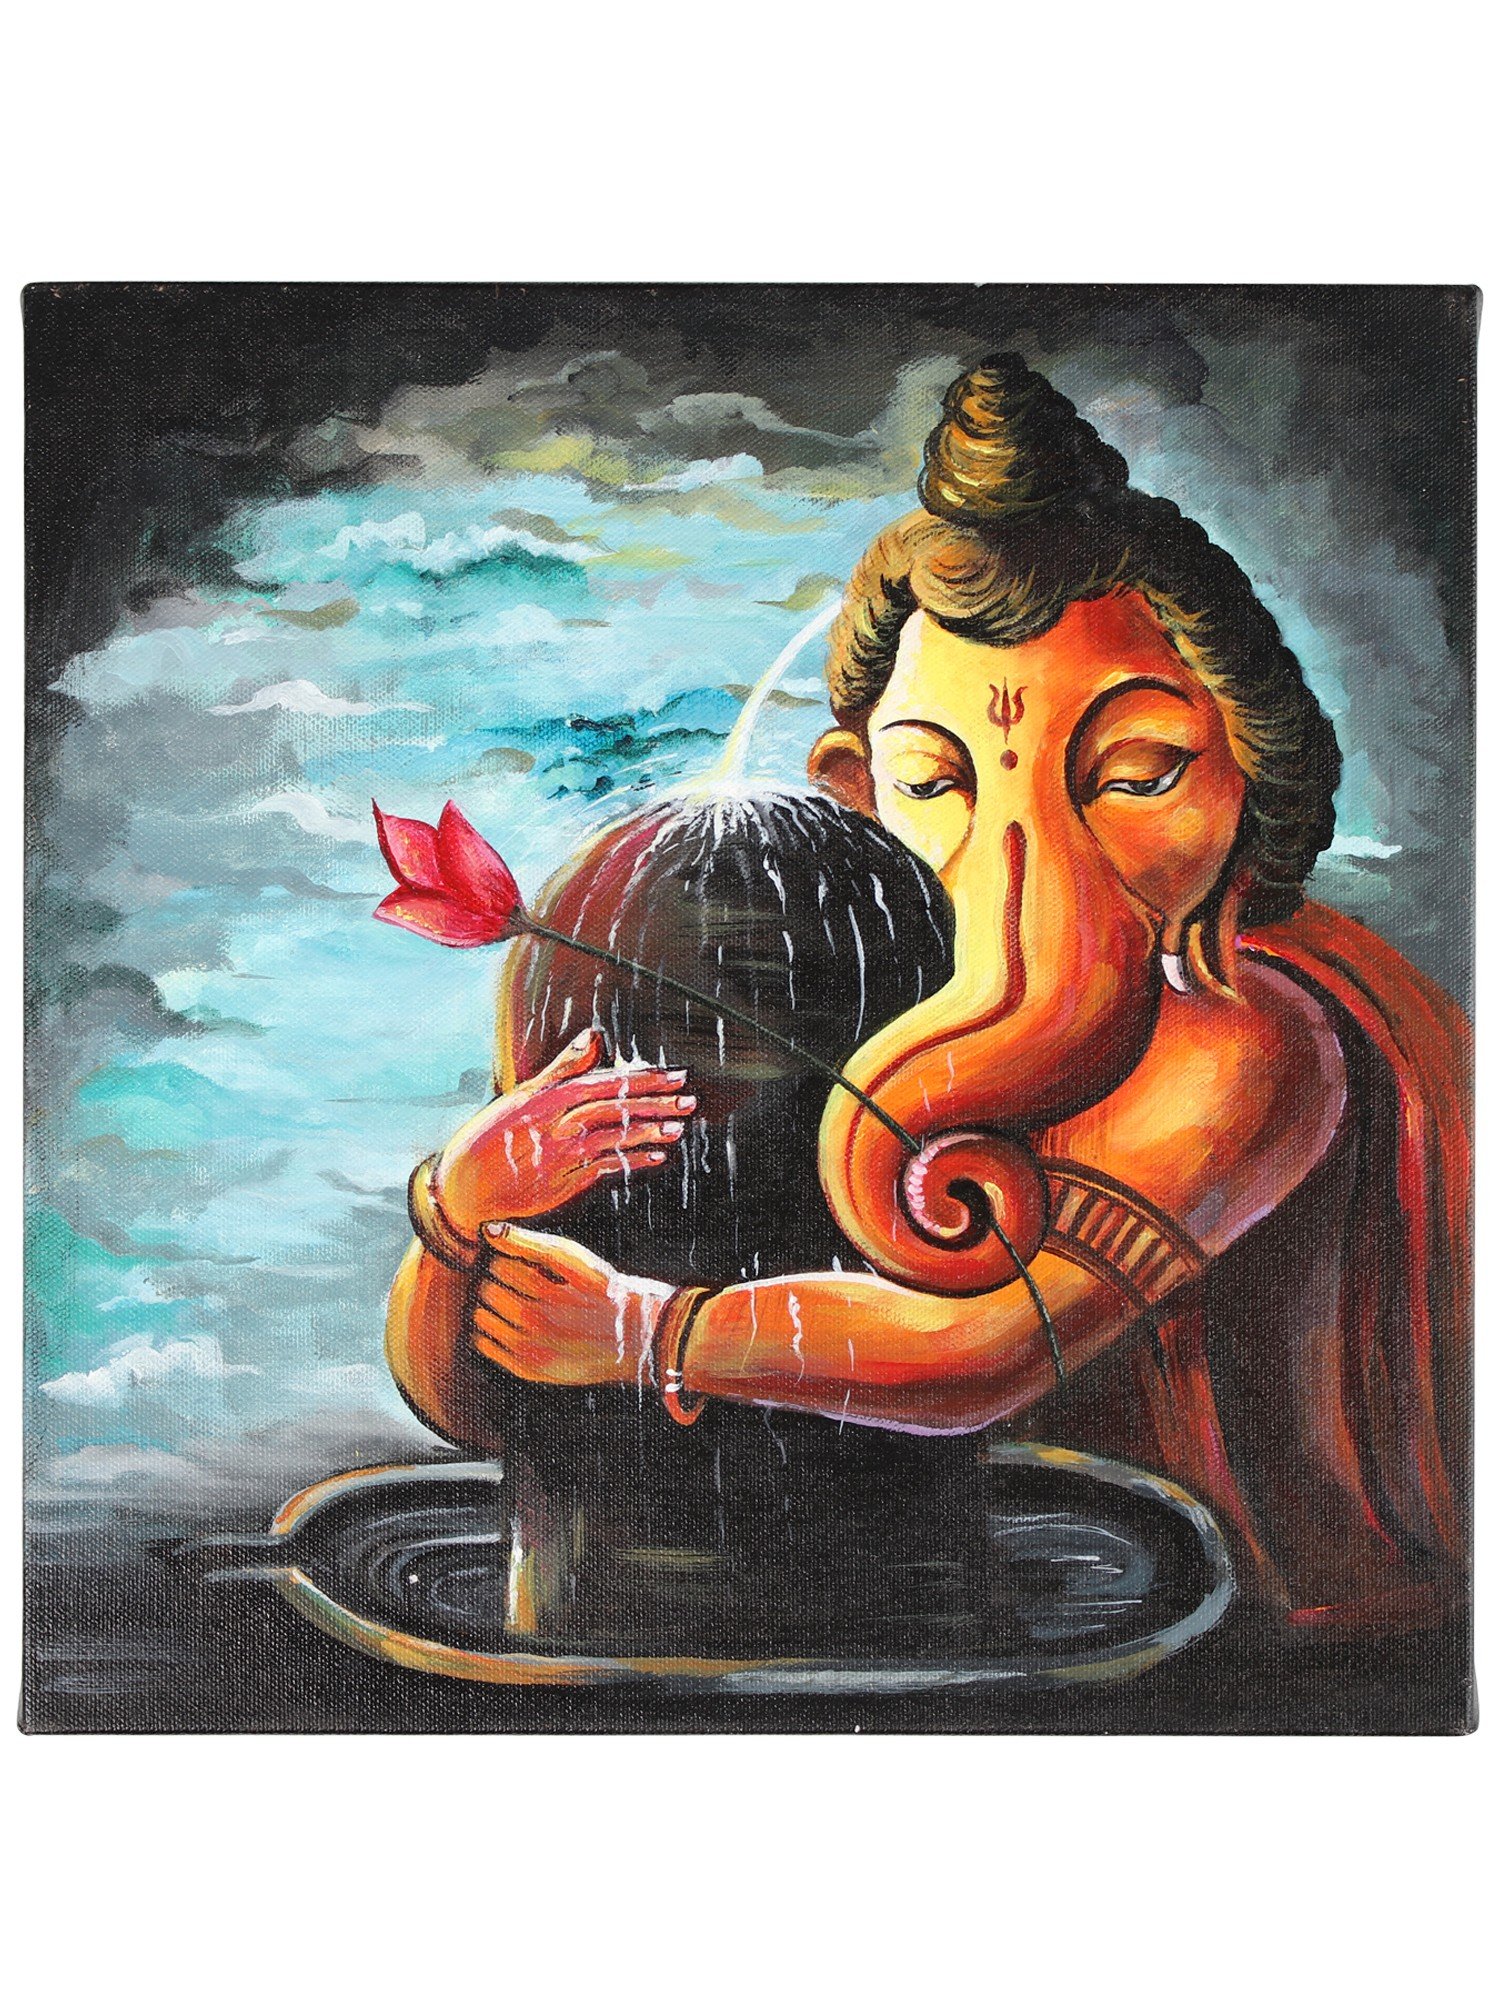 Ganesha Drawing Stock Photos and Images  123RF